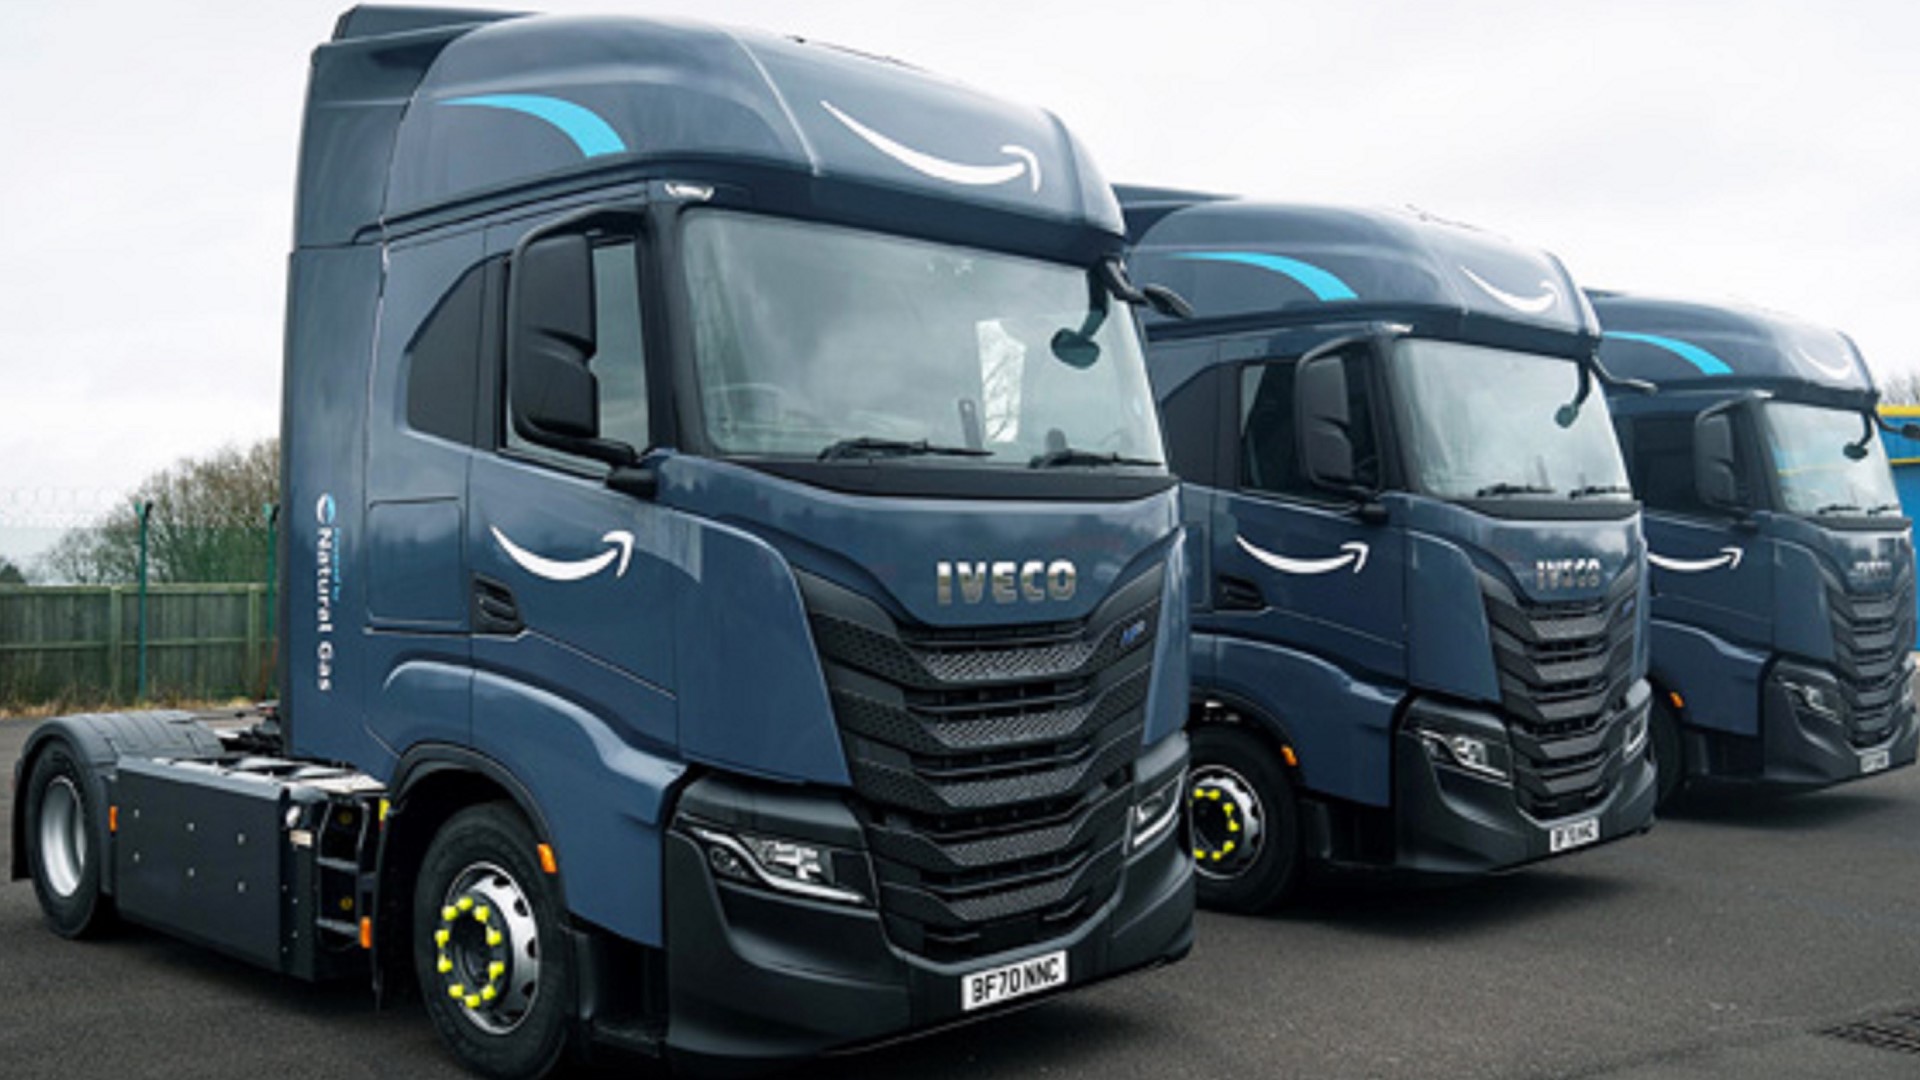 IVECO suministrará 1.064 camiones S-WAY “Natural Power” a Amazon en Europa